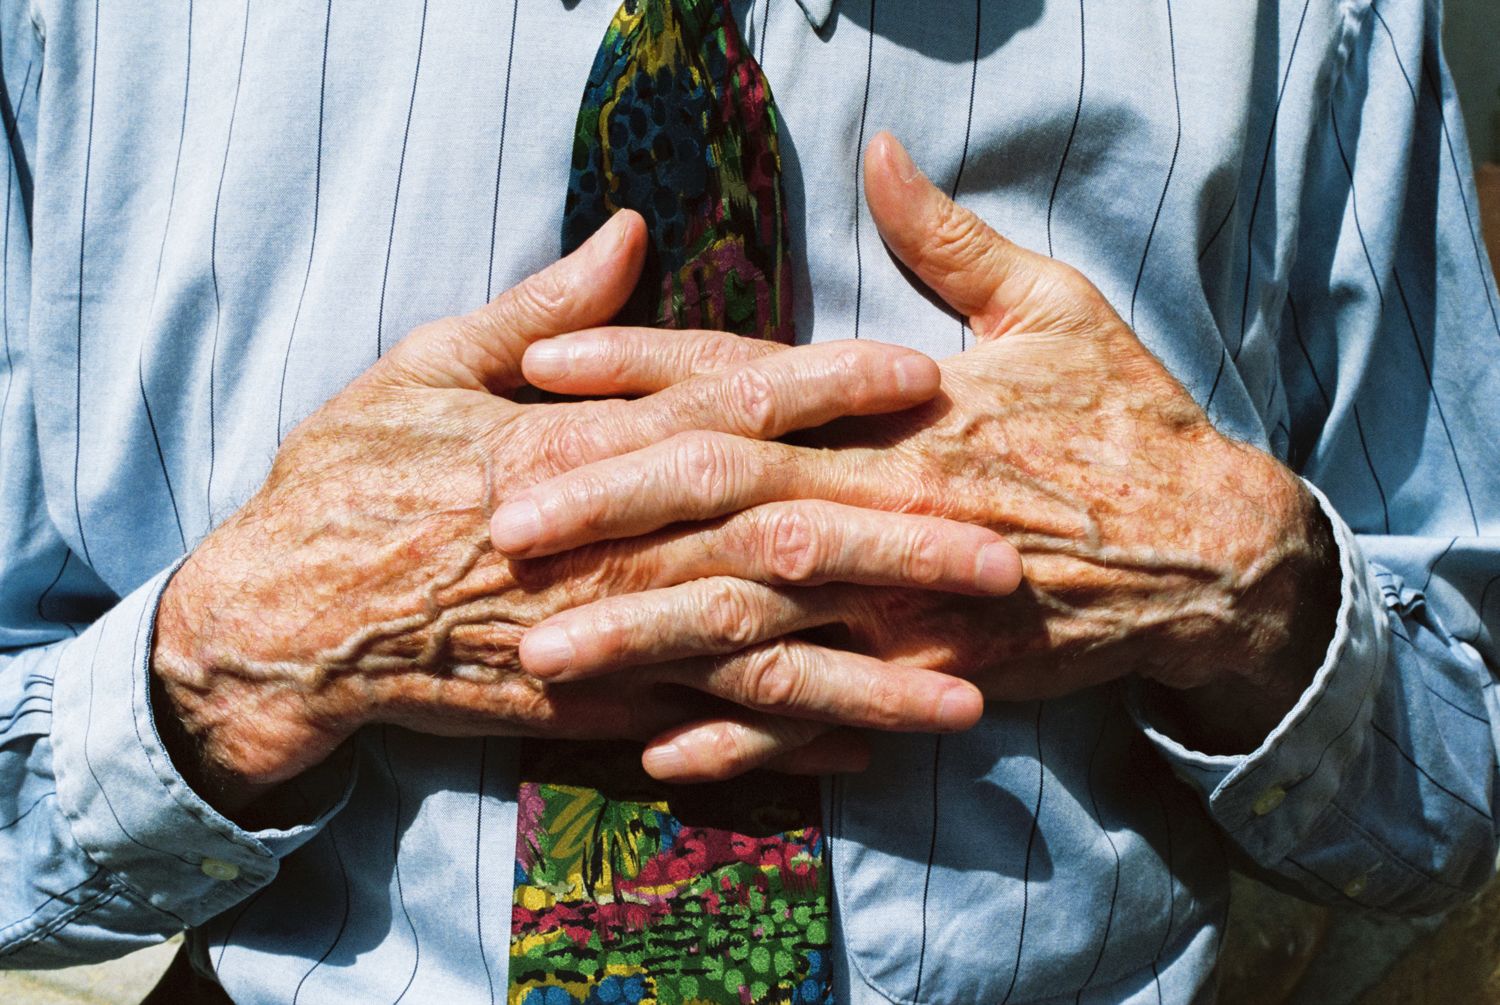 elderly gentleman hands intwined together